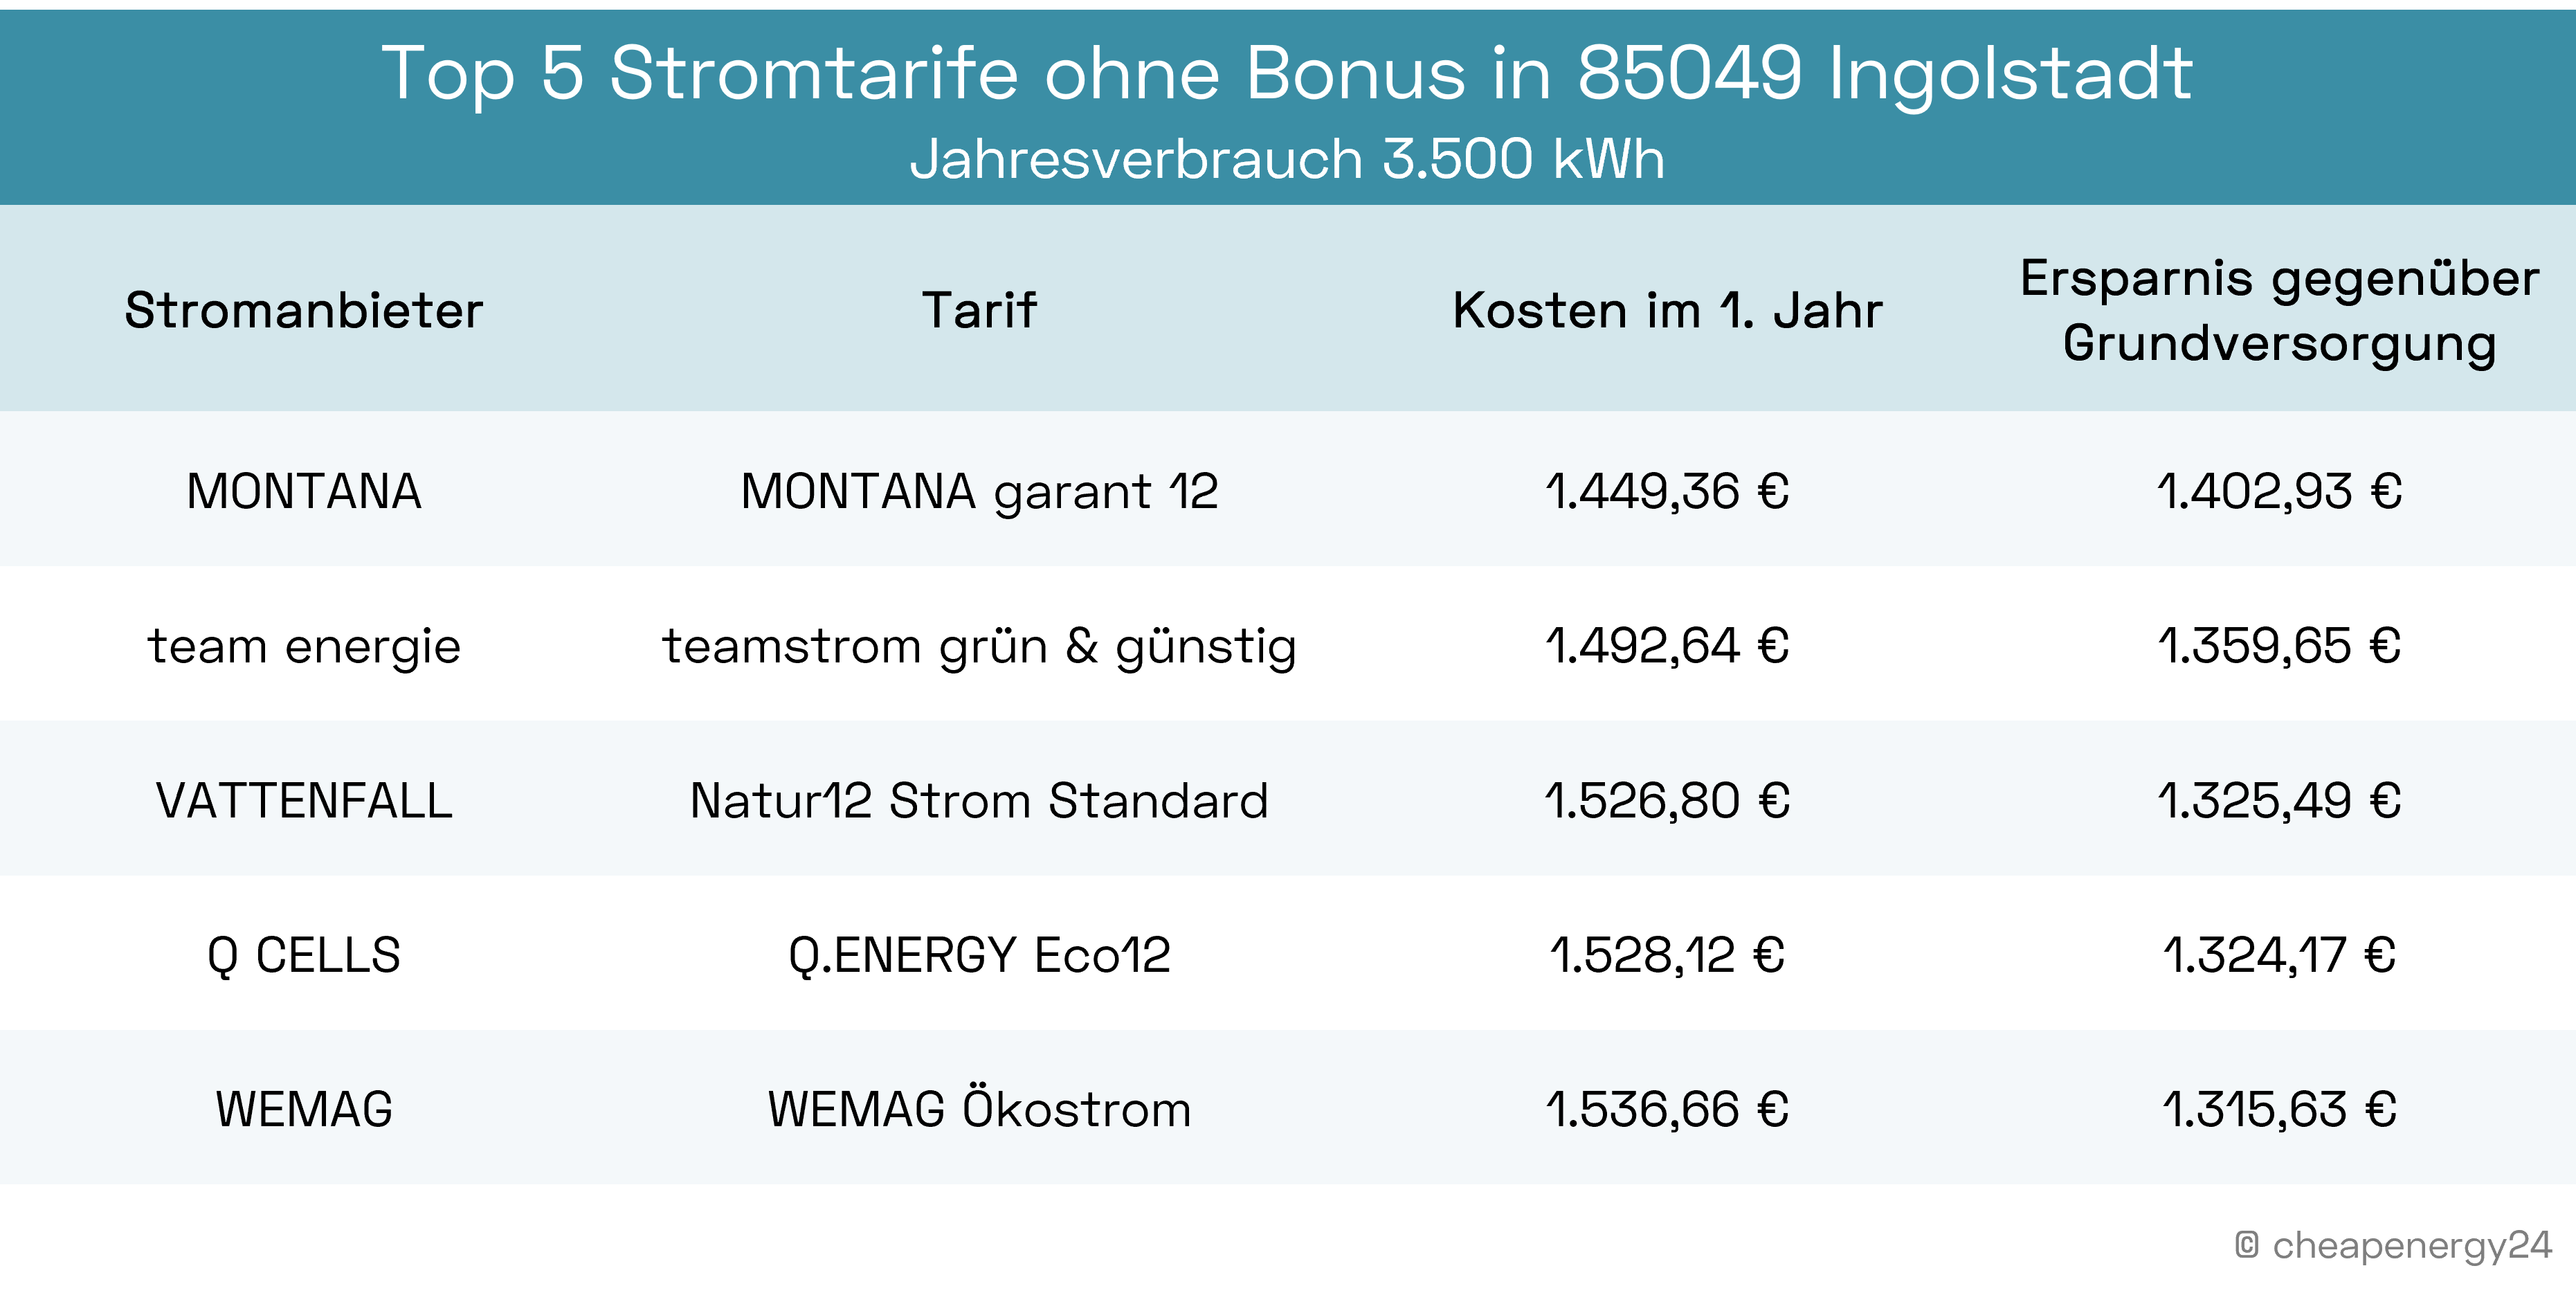 Die besten Stromtarife ohne Bonus in Ingolstadt